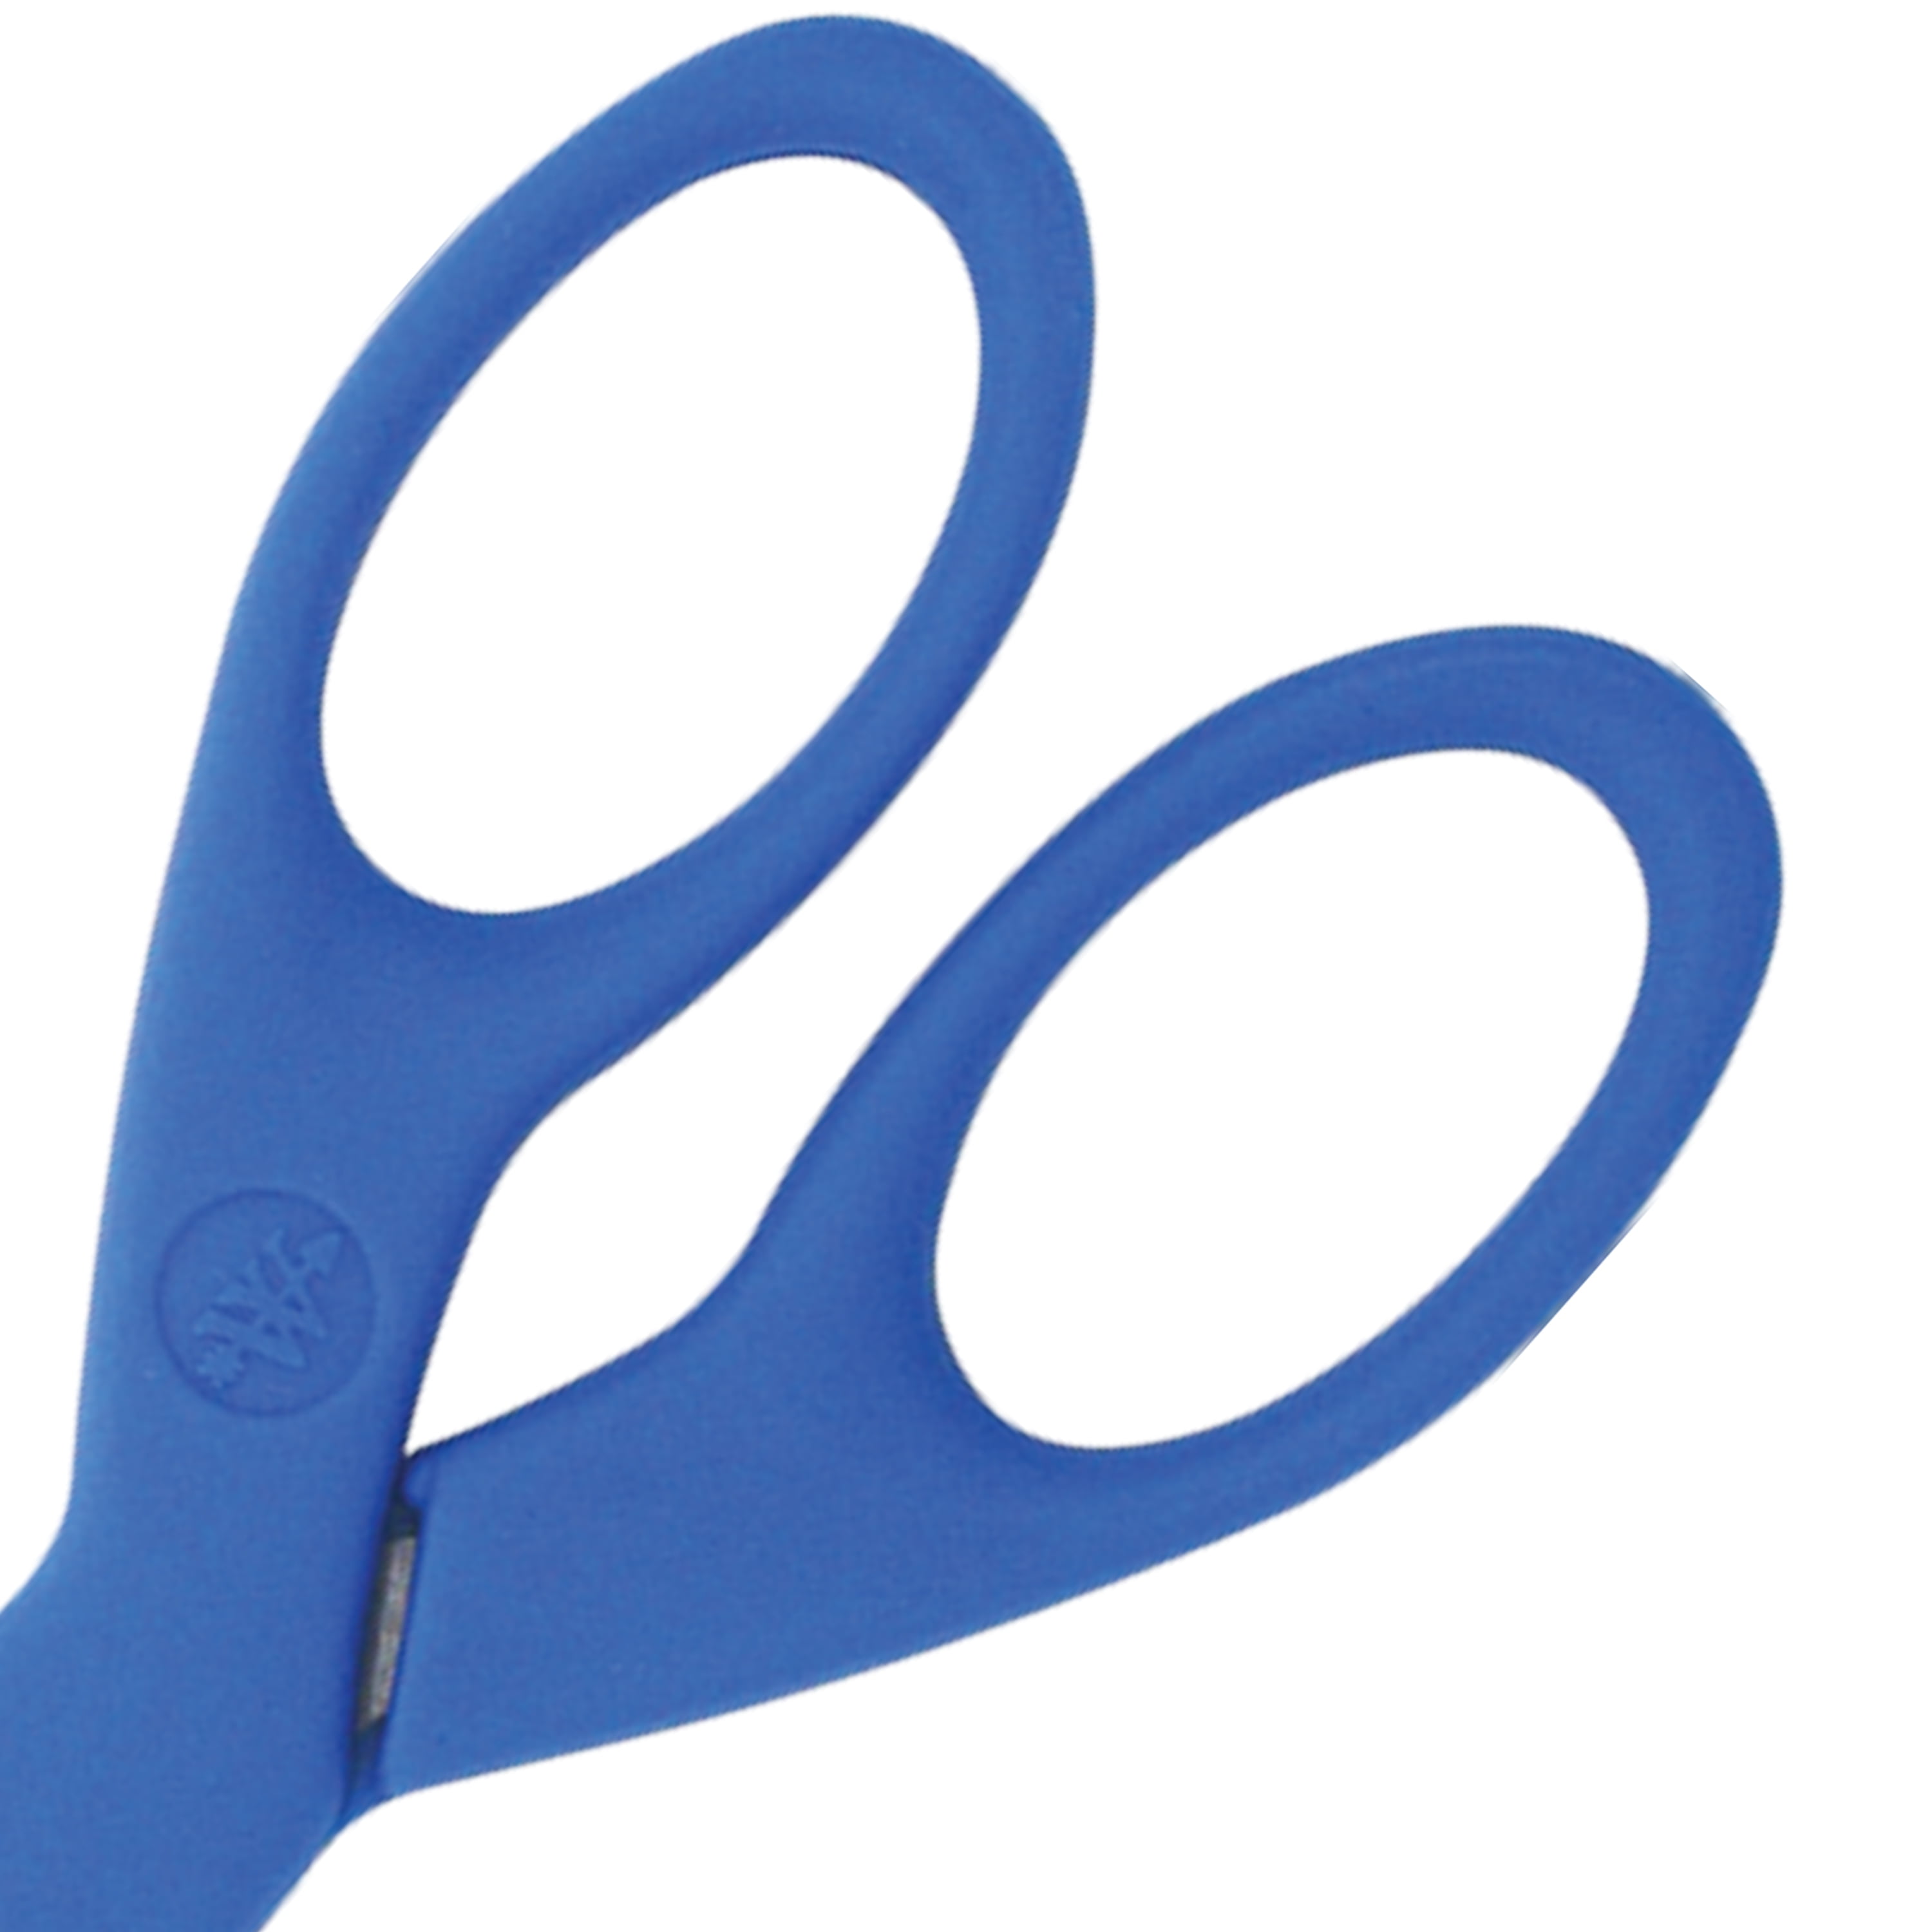 Westcott All Purpose Scissors, 5, 7, 8, for Craft, Blue, 3-Pack 